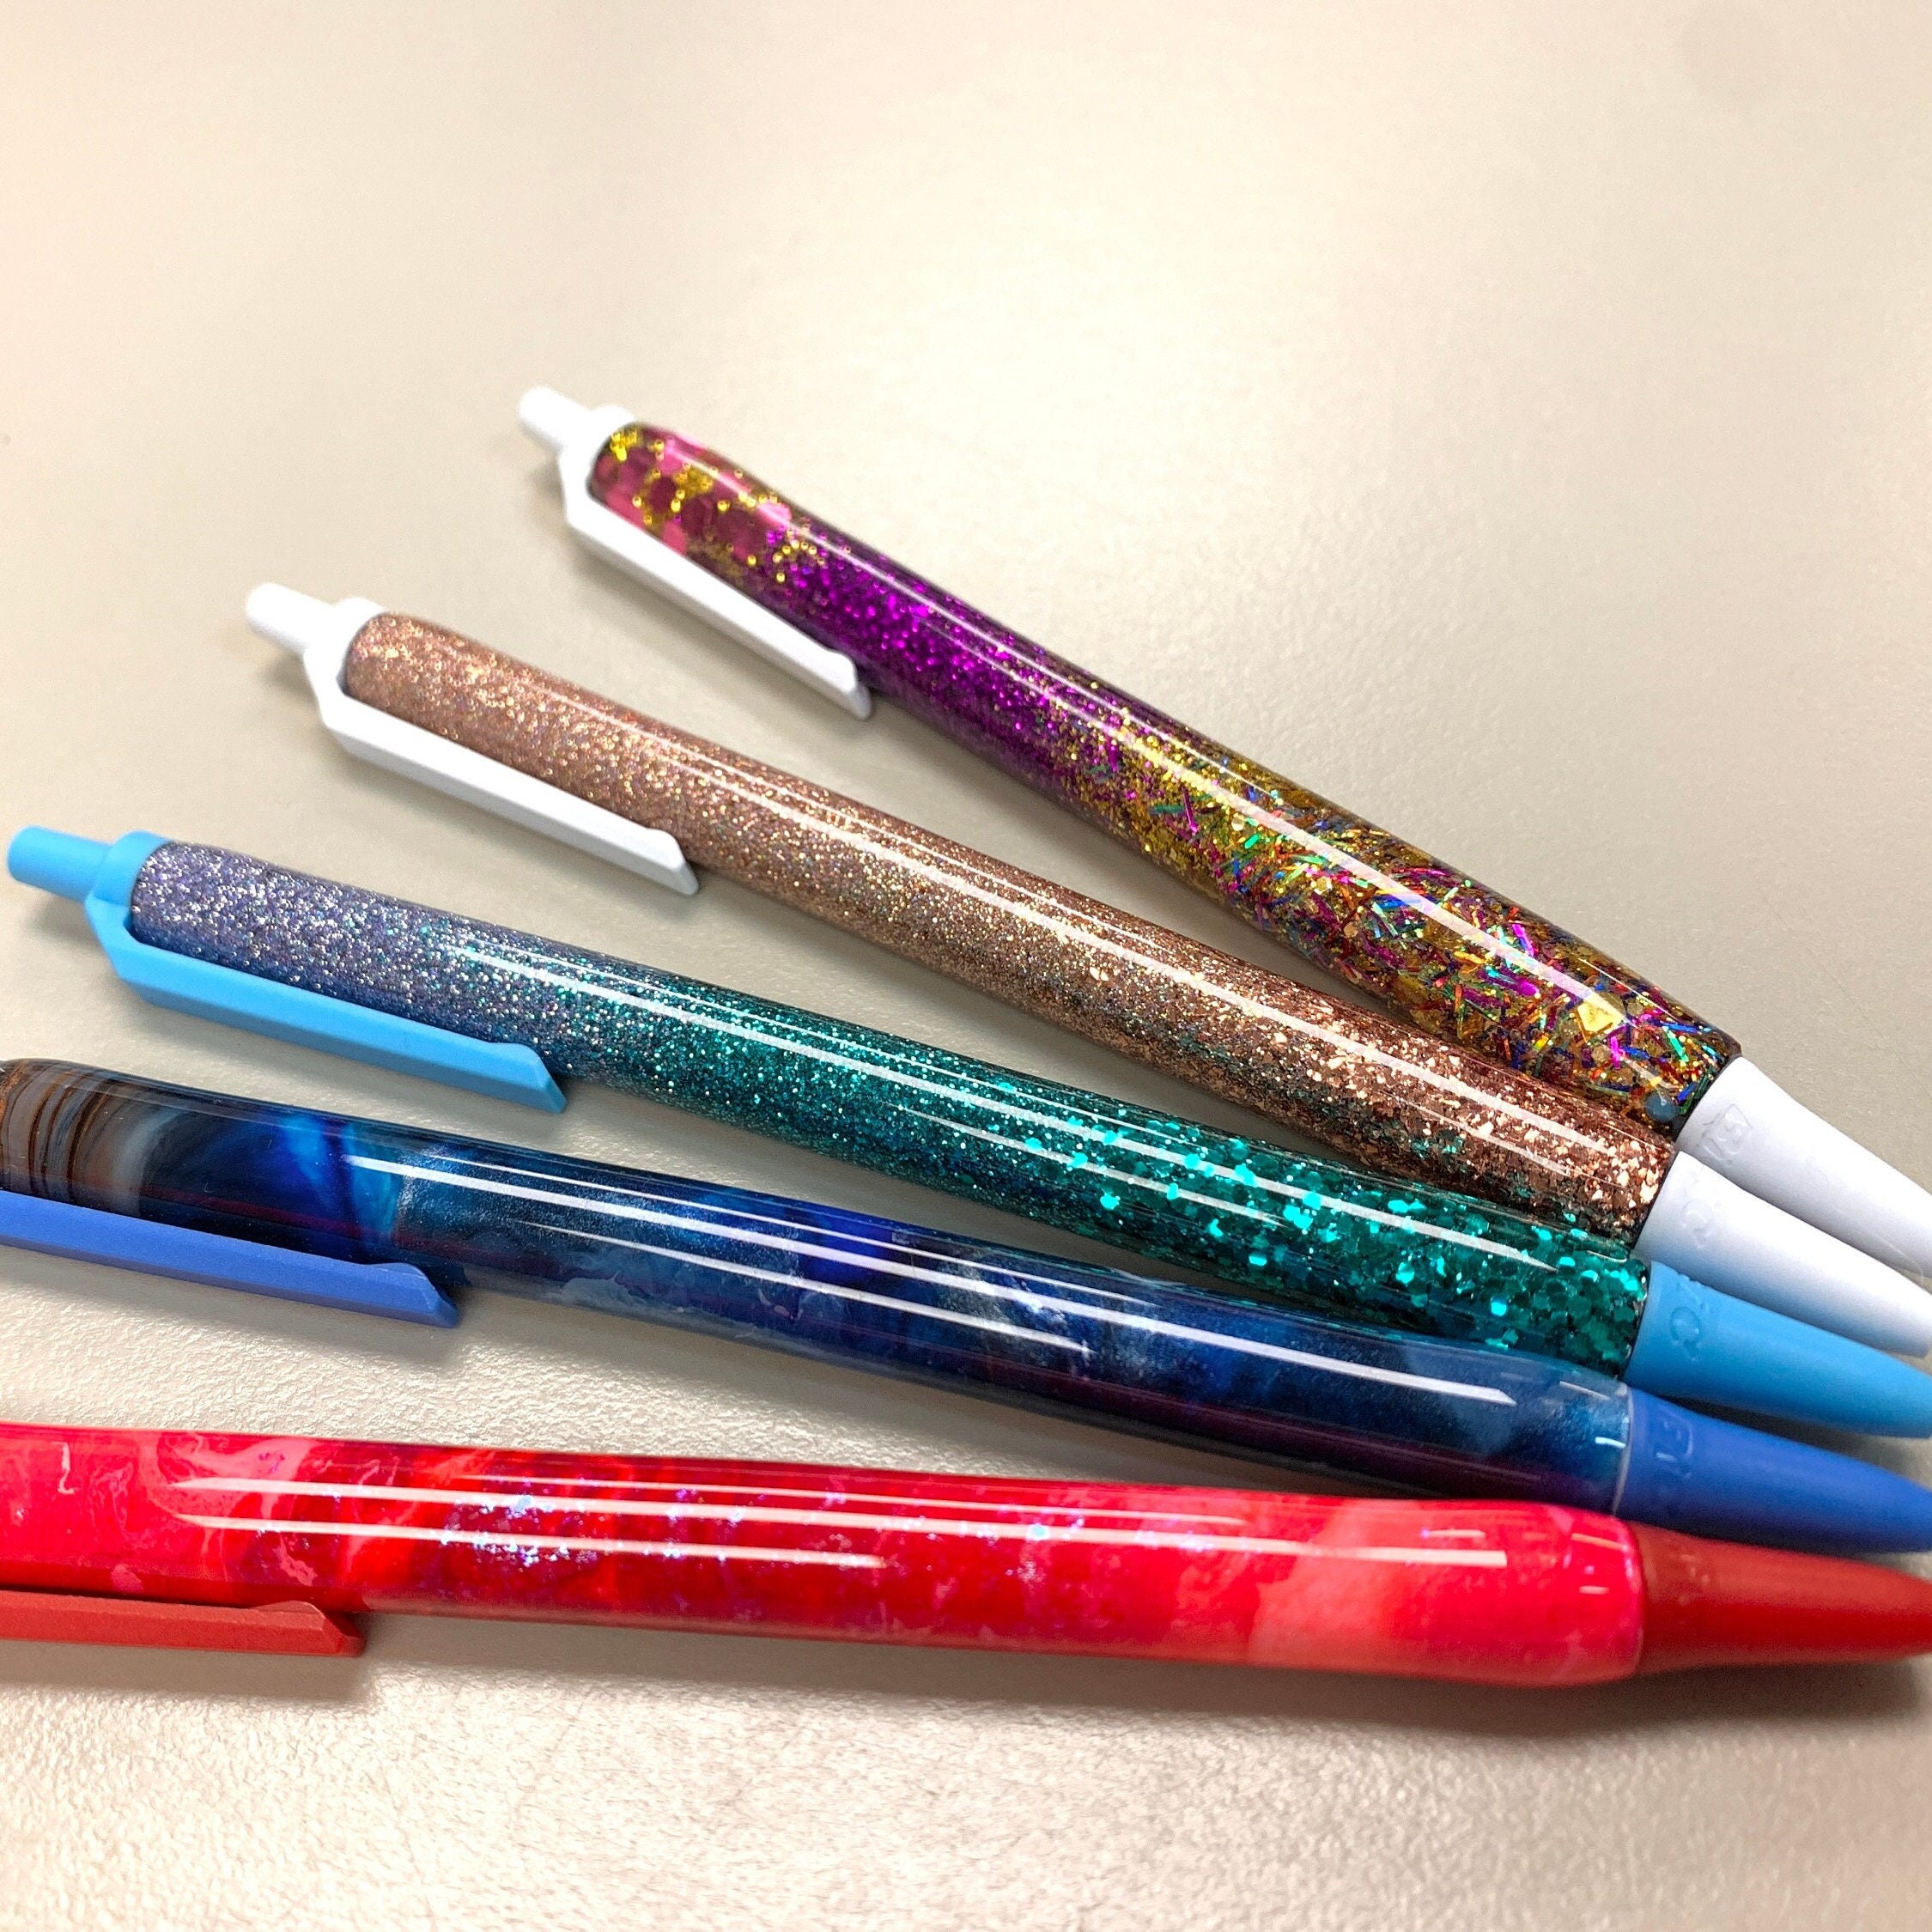 Bic Round Stic Sparkle Pens